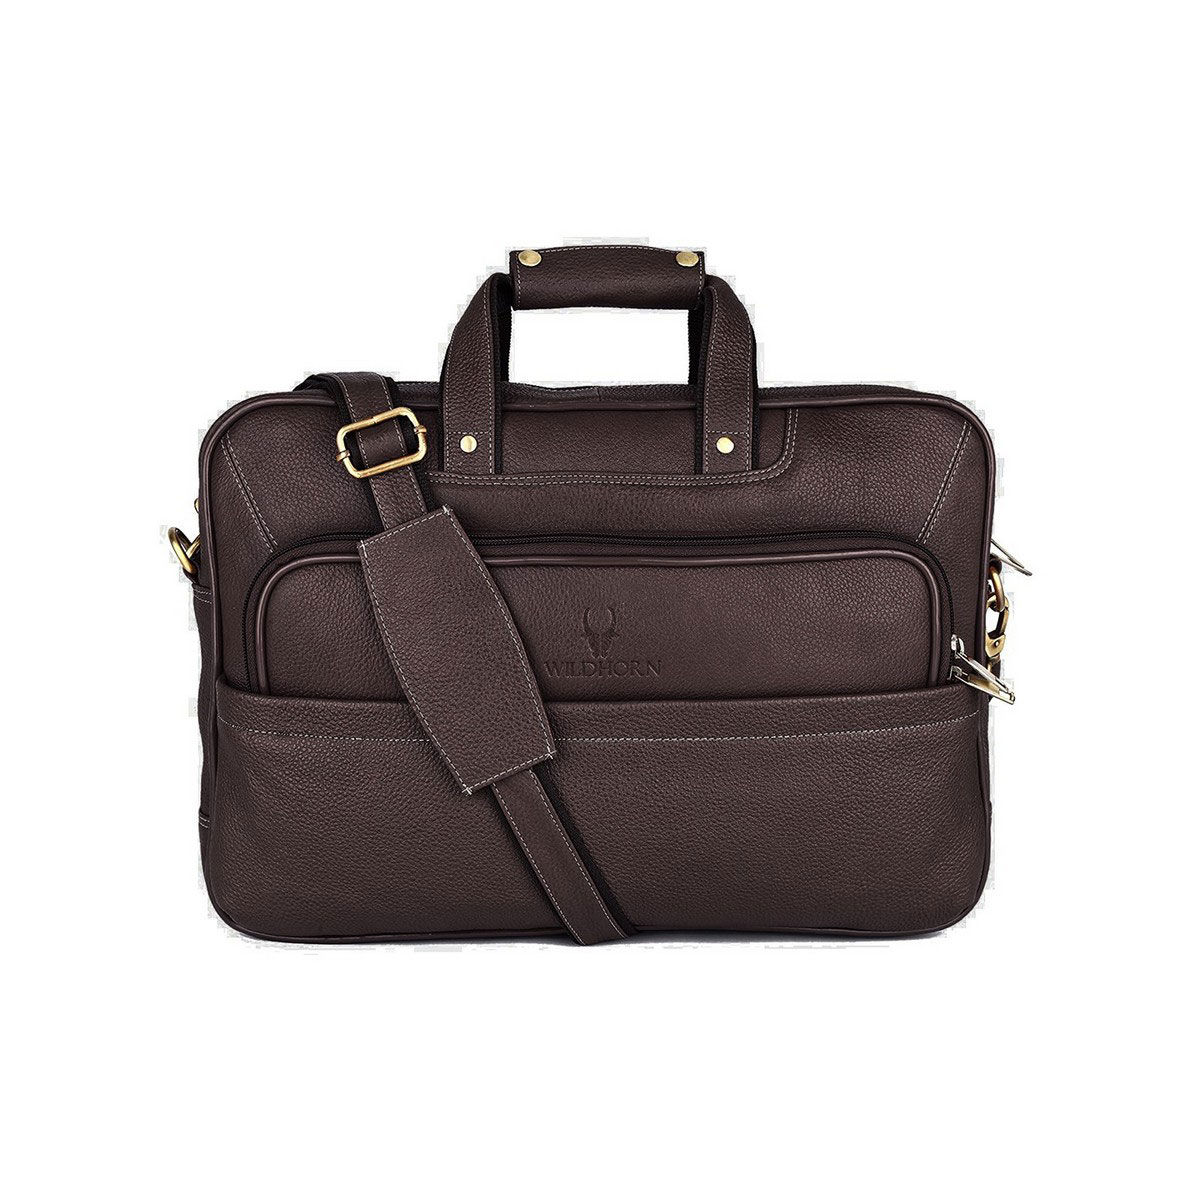 FS primum leather messenger bags for men  woman leather laptop bags men  professional laptop bags